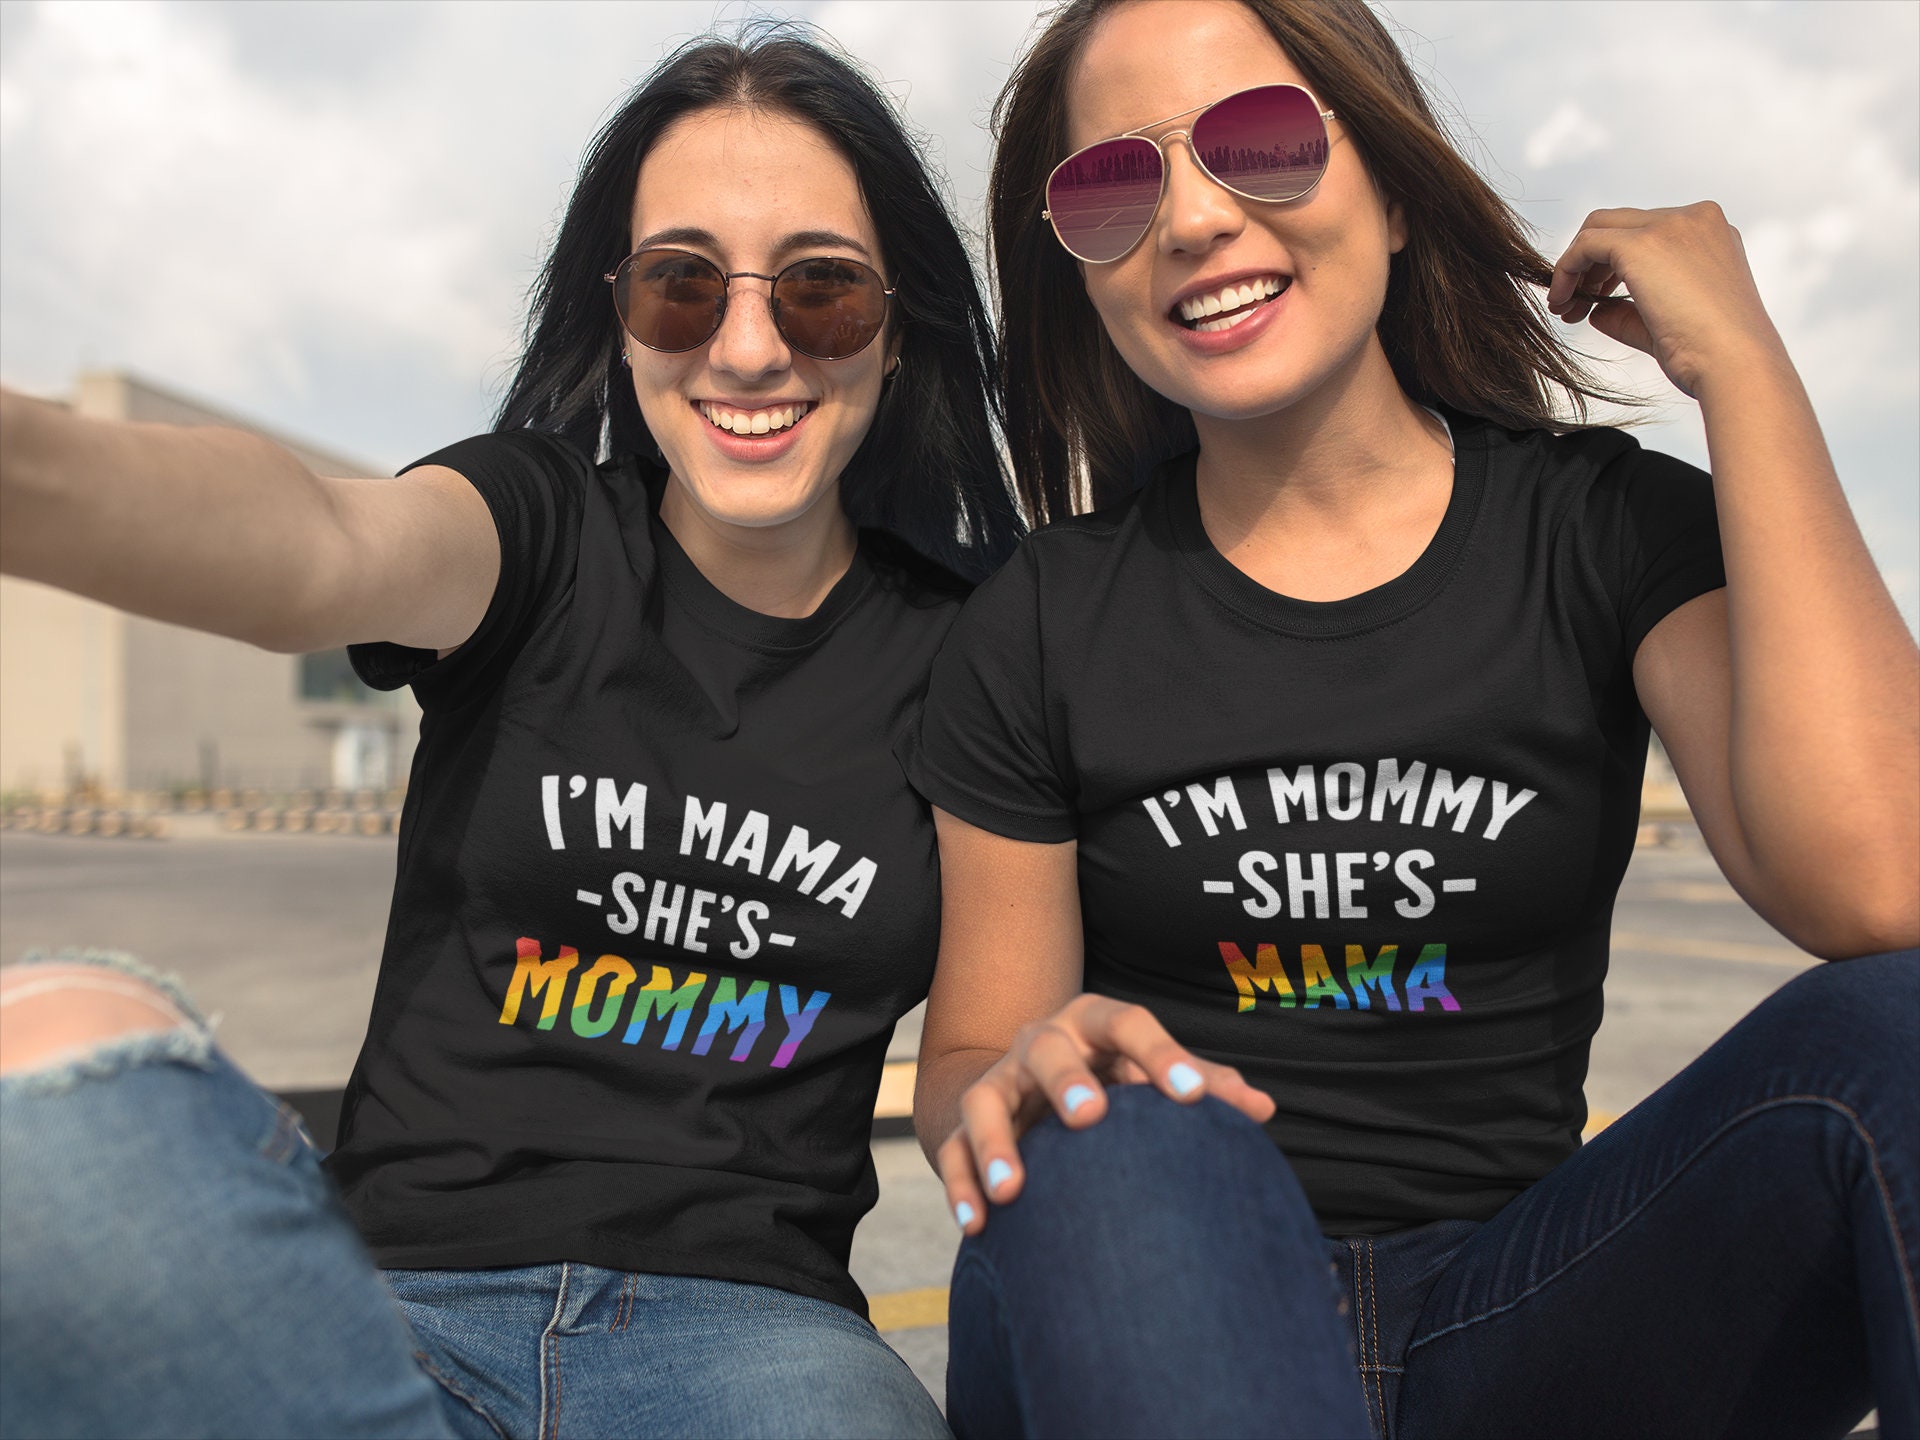 Lesbian Mommys Com